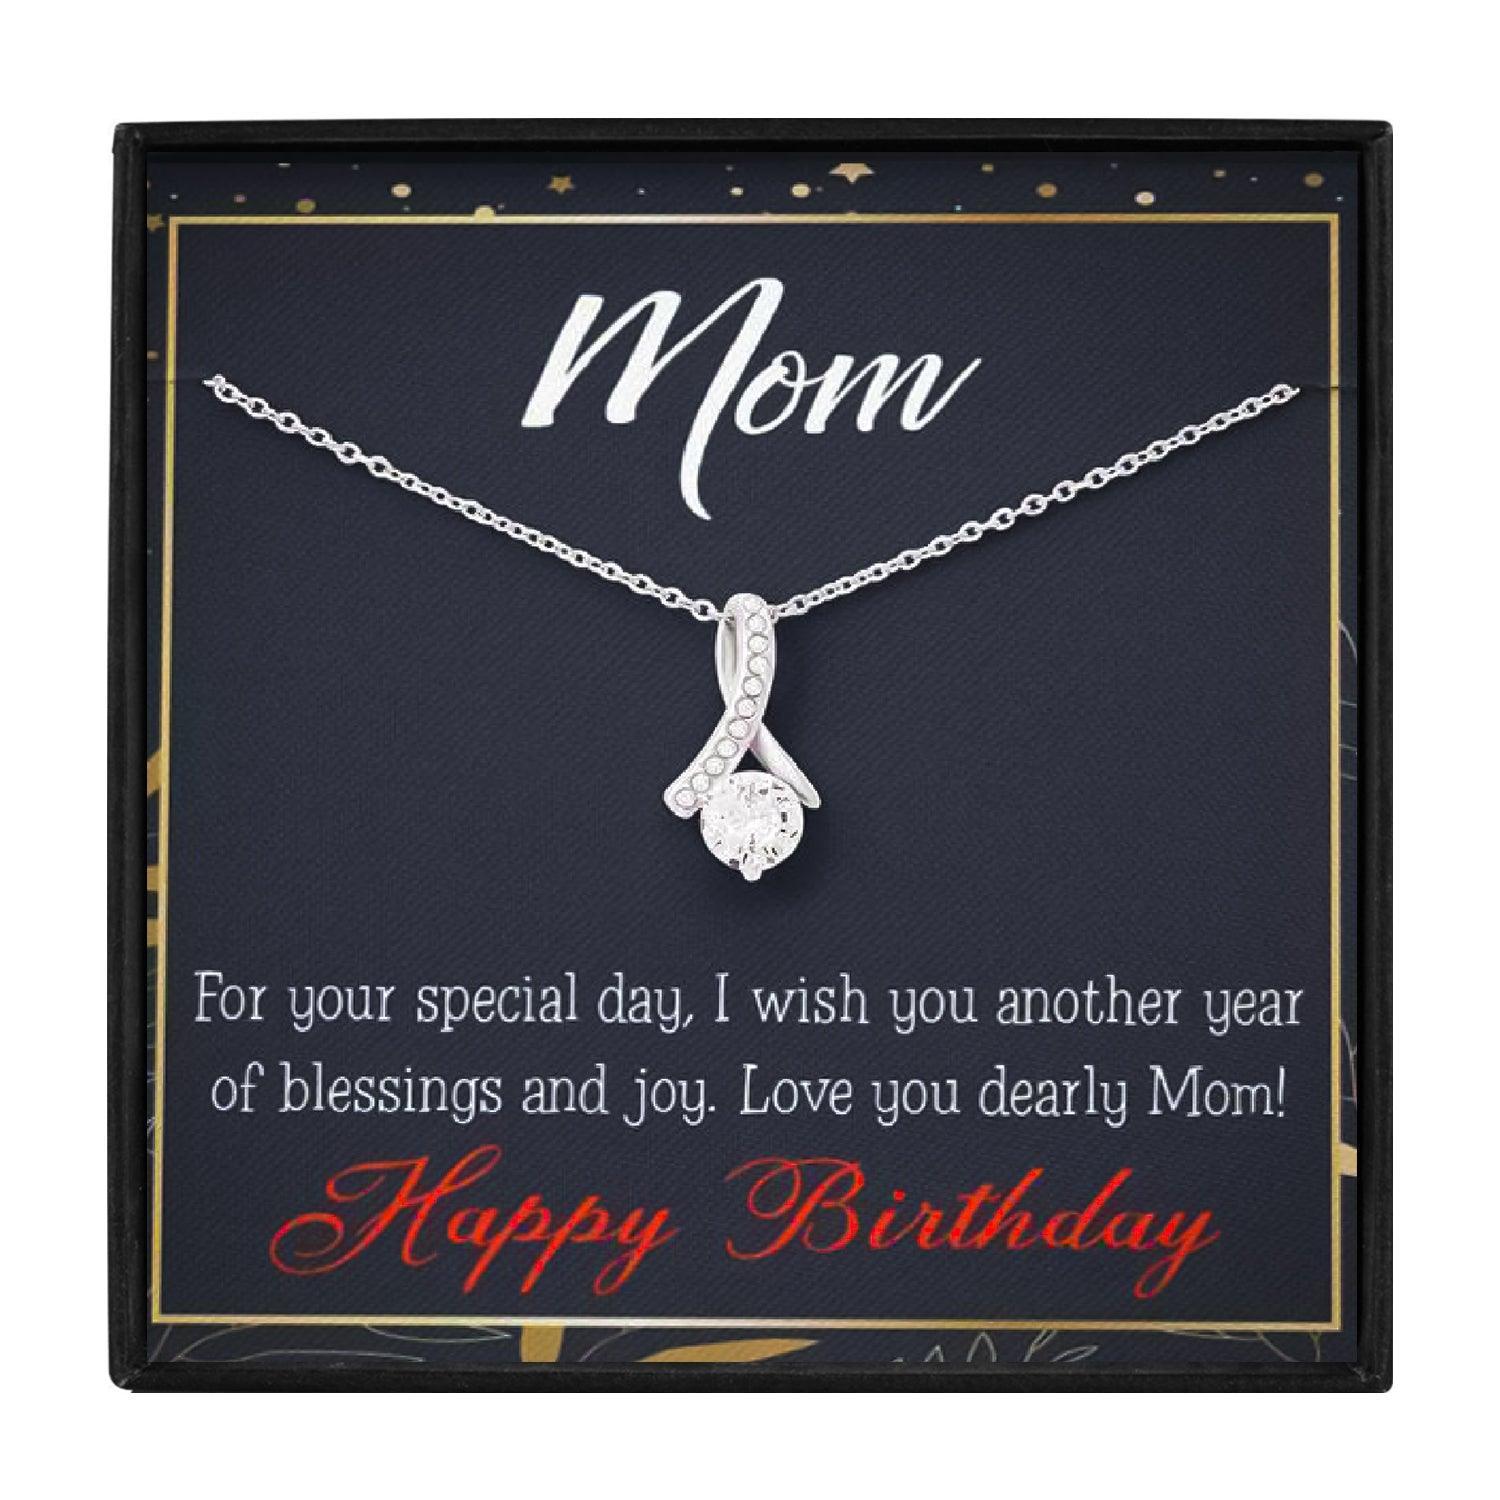 Happy Birthday Mom Necklace Gift Set in 2023 | Happy Birthday Mom Necklace Gift Set - undefined | Happy Birthday Mom Necklace Gift ideas, mom birthday gift, mom gift ideas, Mom Necklace Gift, necklace gift ideas | From Hunny Life | hunnylife.com